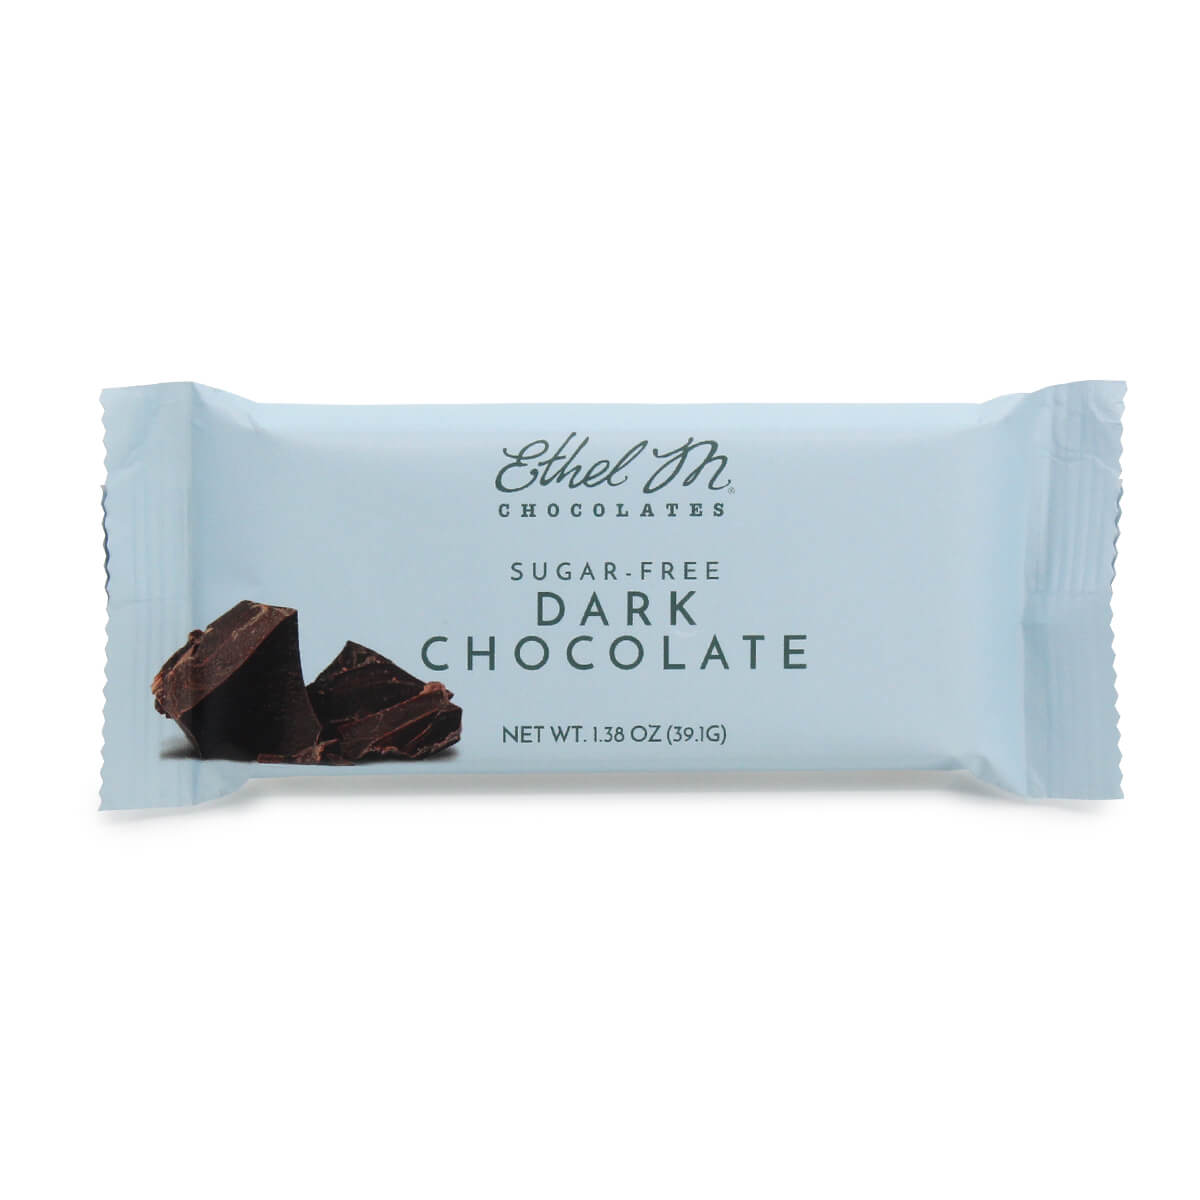 Premium Dark Chocolate Candy Bar